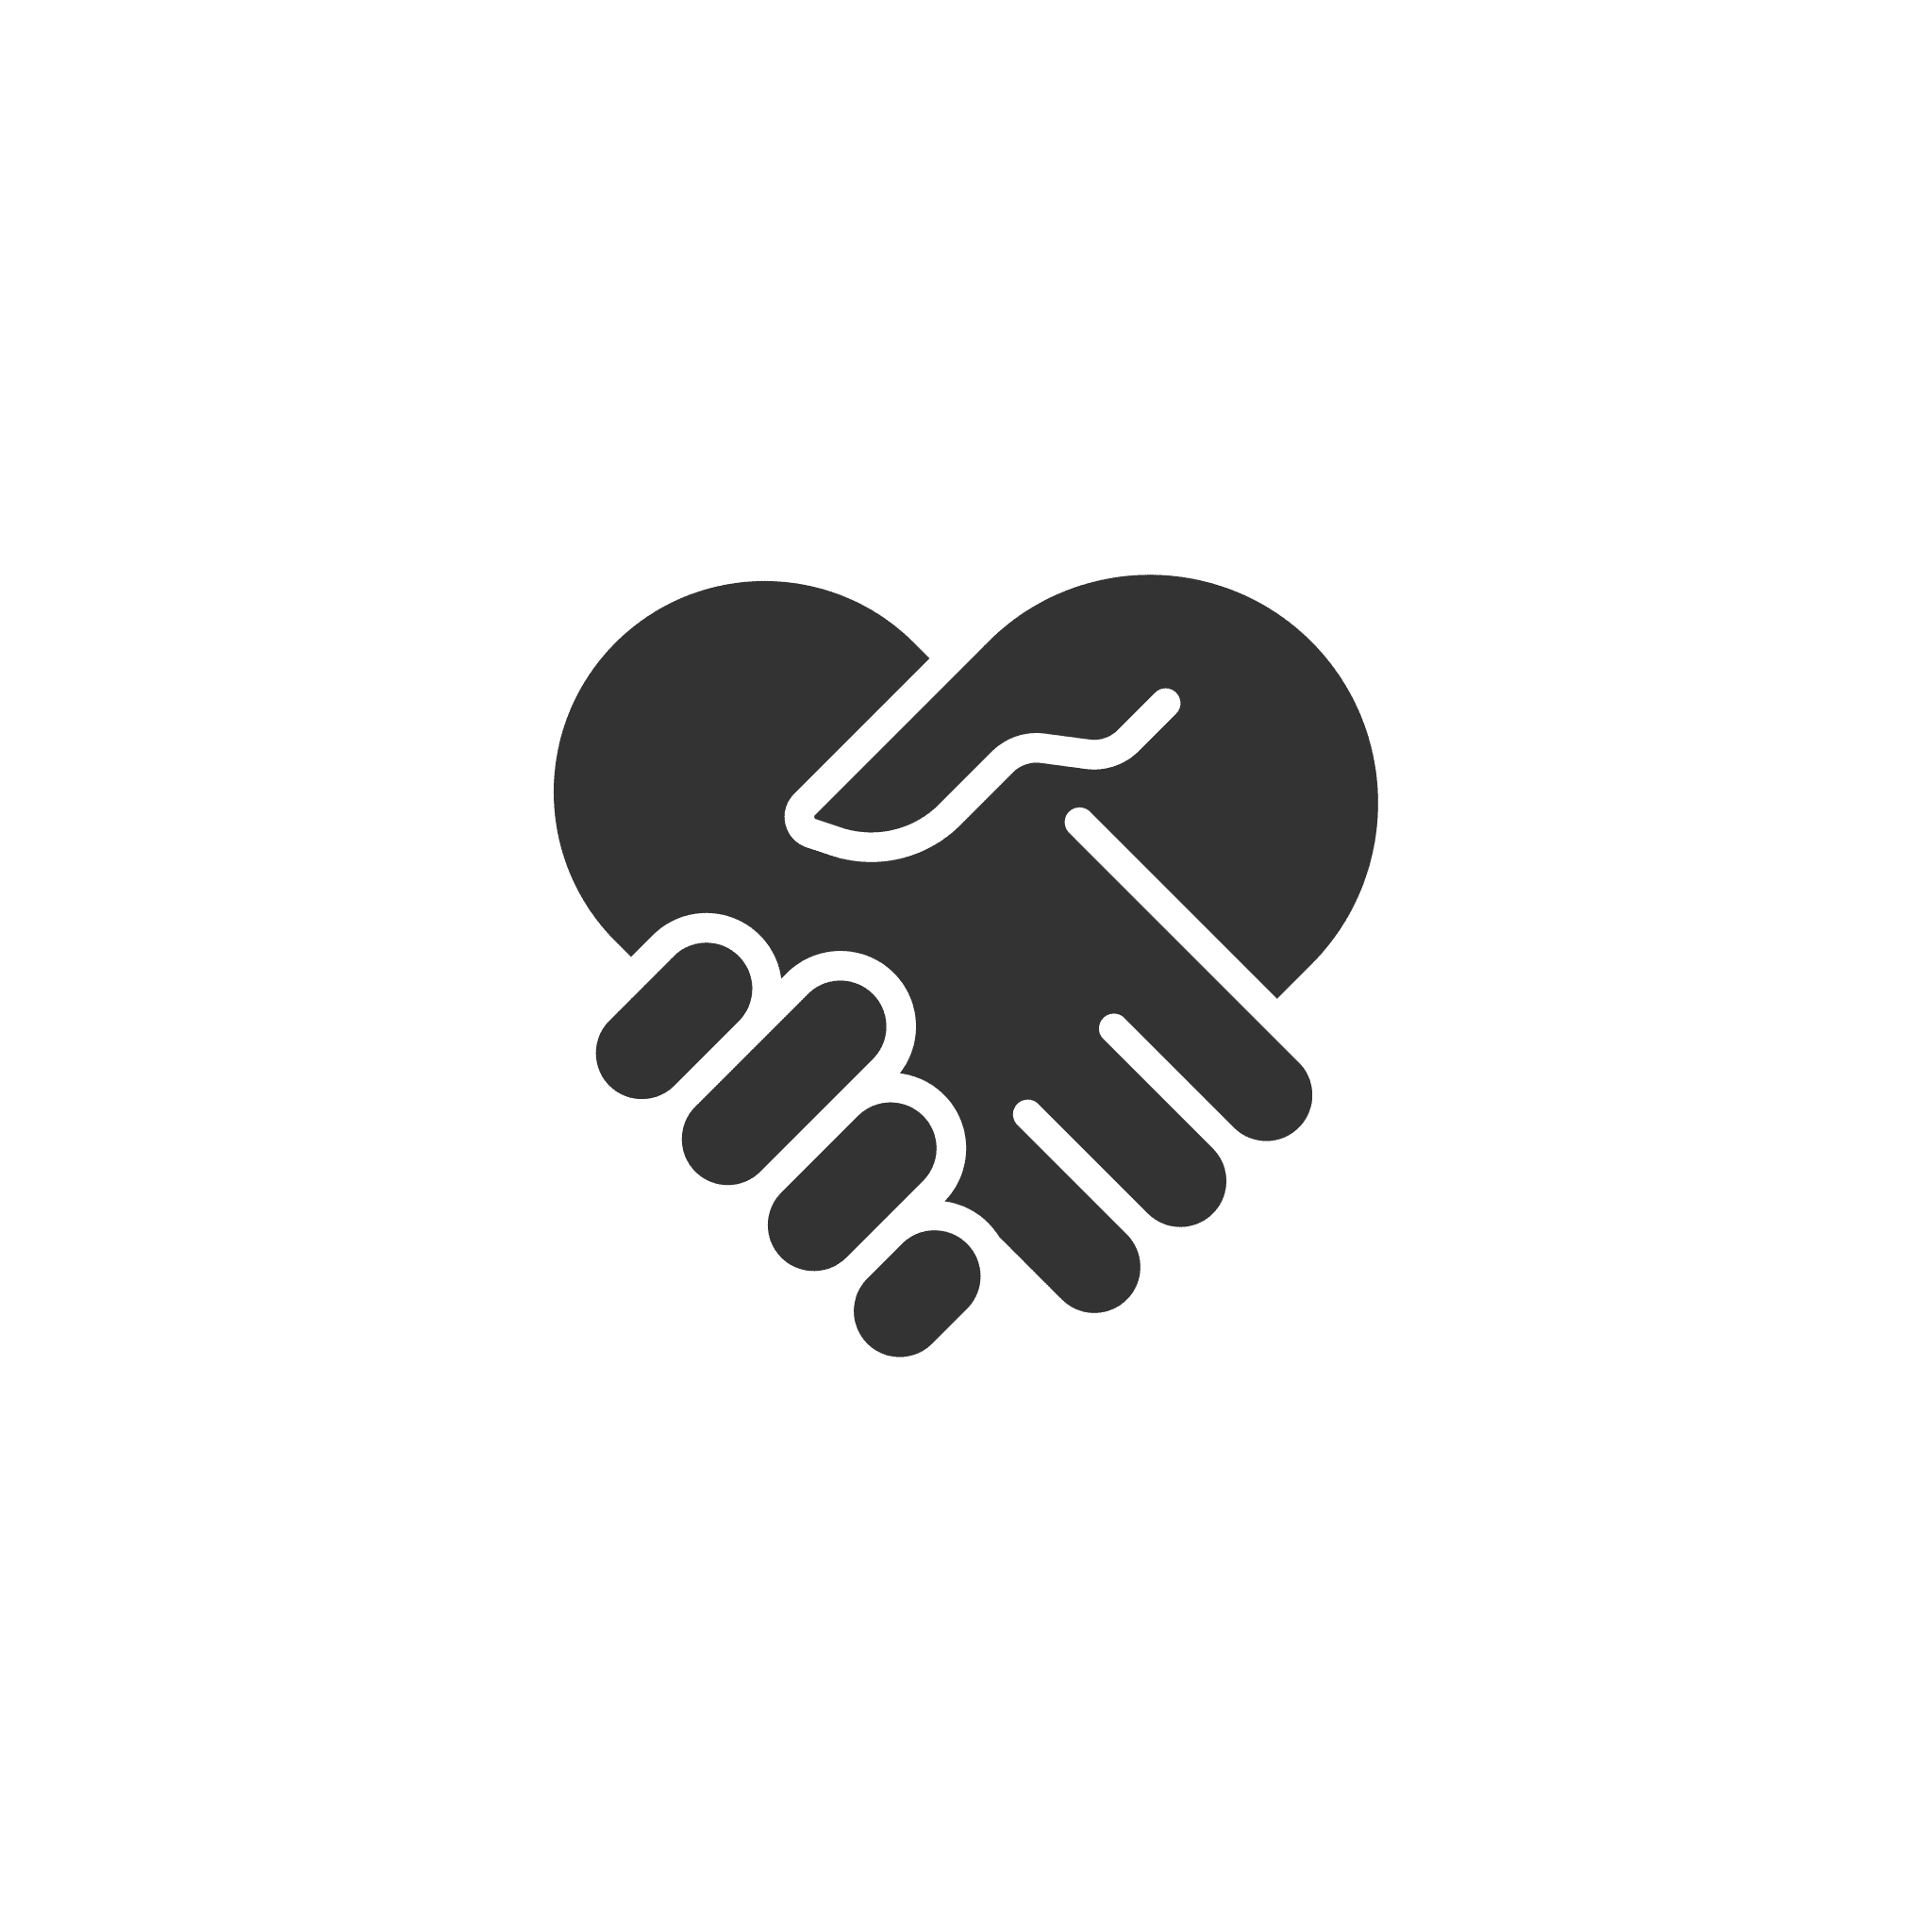 Handshake Logo Photos and Images | Shutterstock